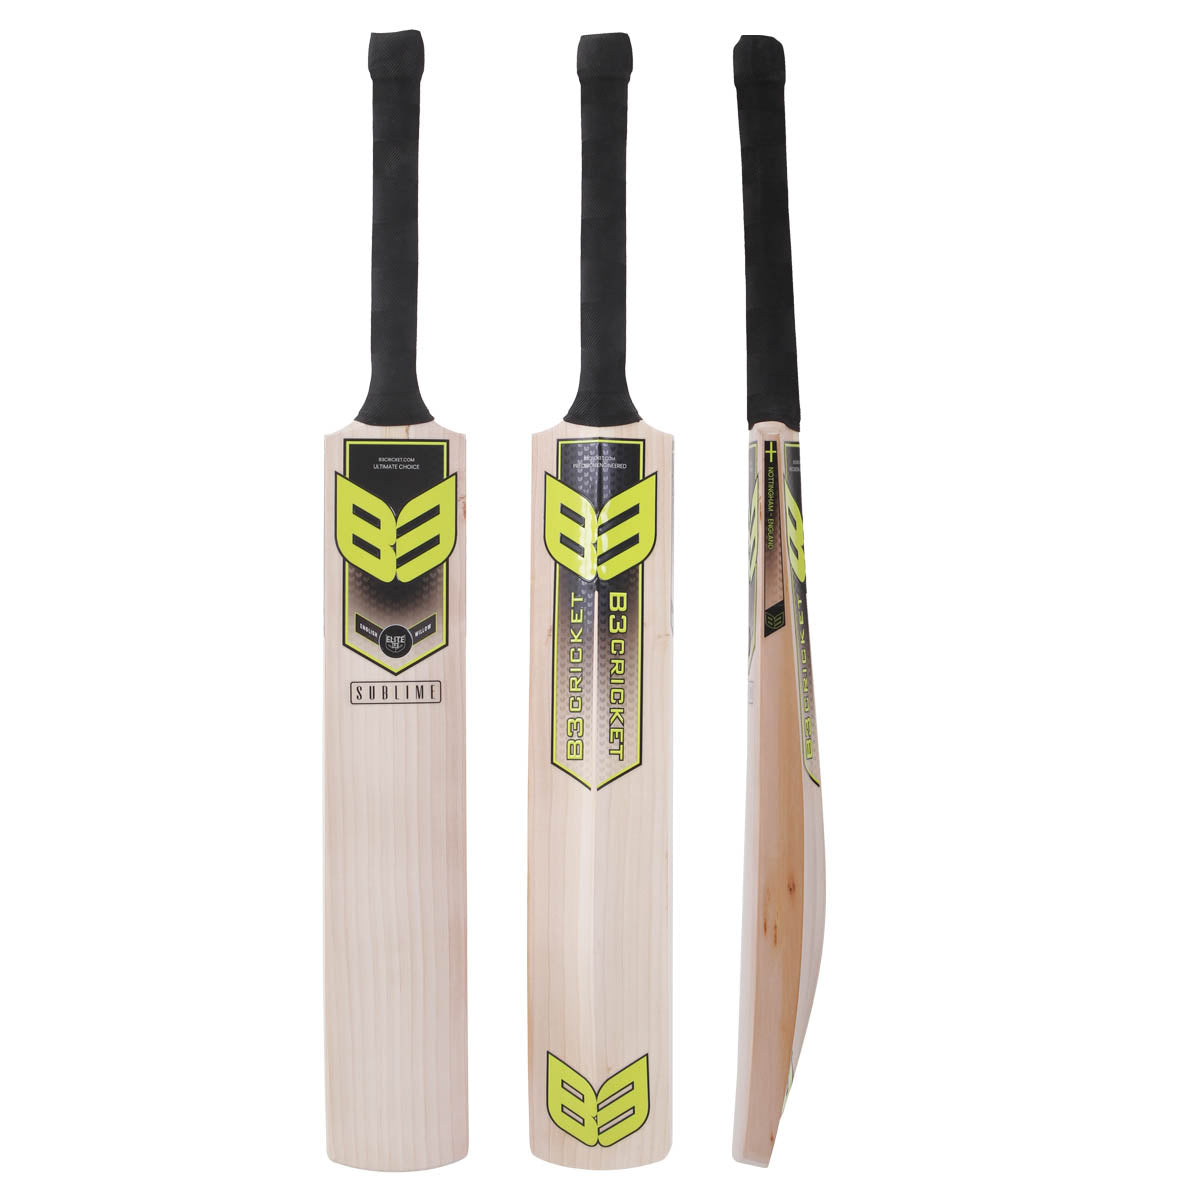 B3 Cricket Sublime Elite (Grade 2) Cricket Bat - The Cricket Store